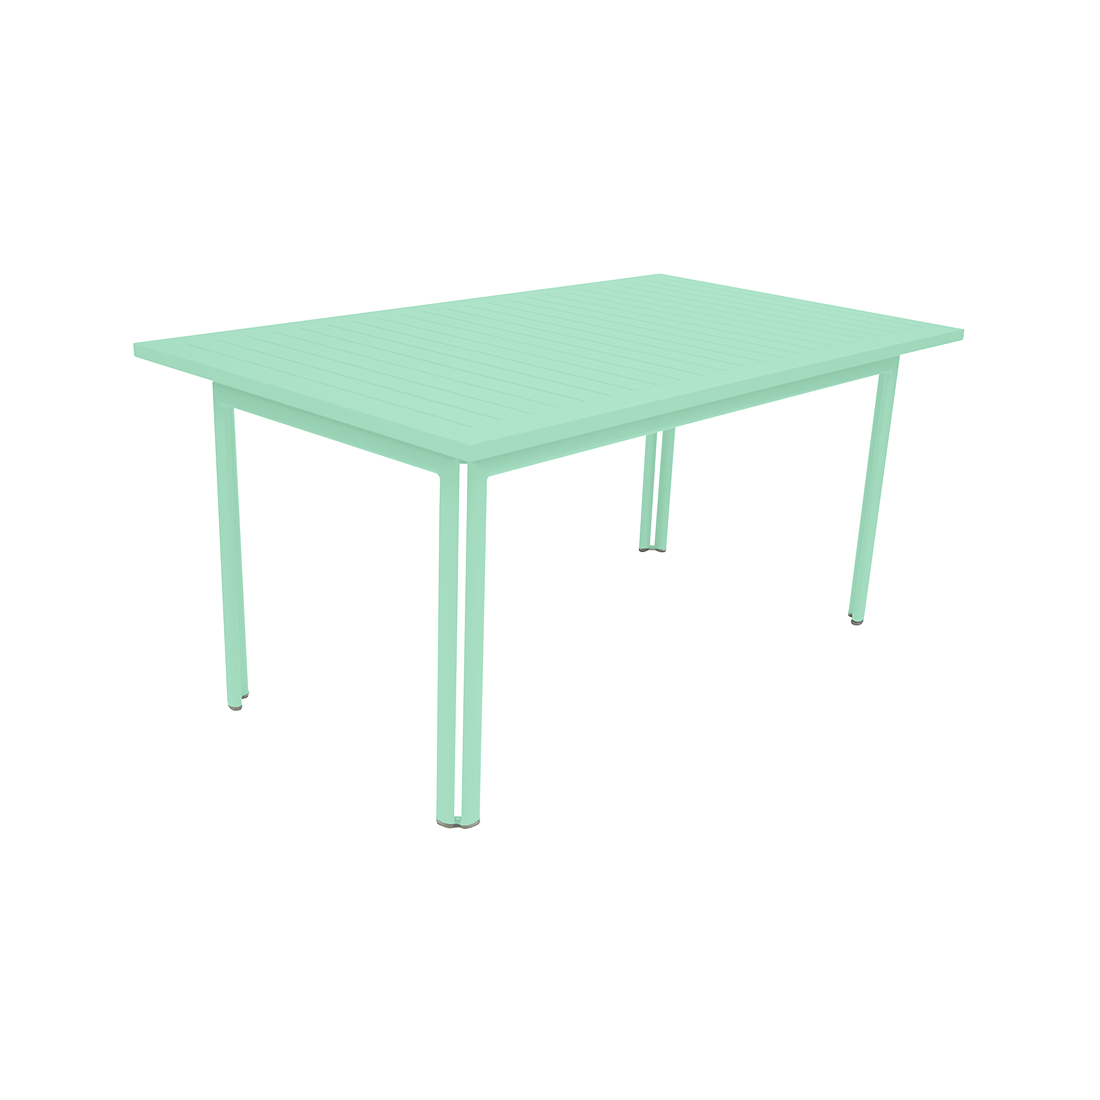 Costa Rectangular Table 160 x 80